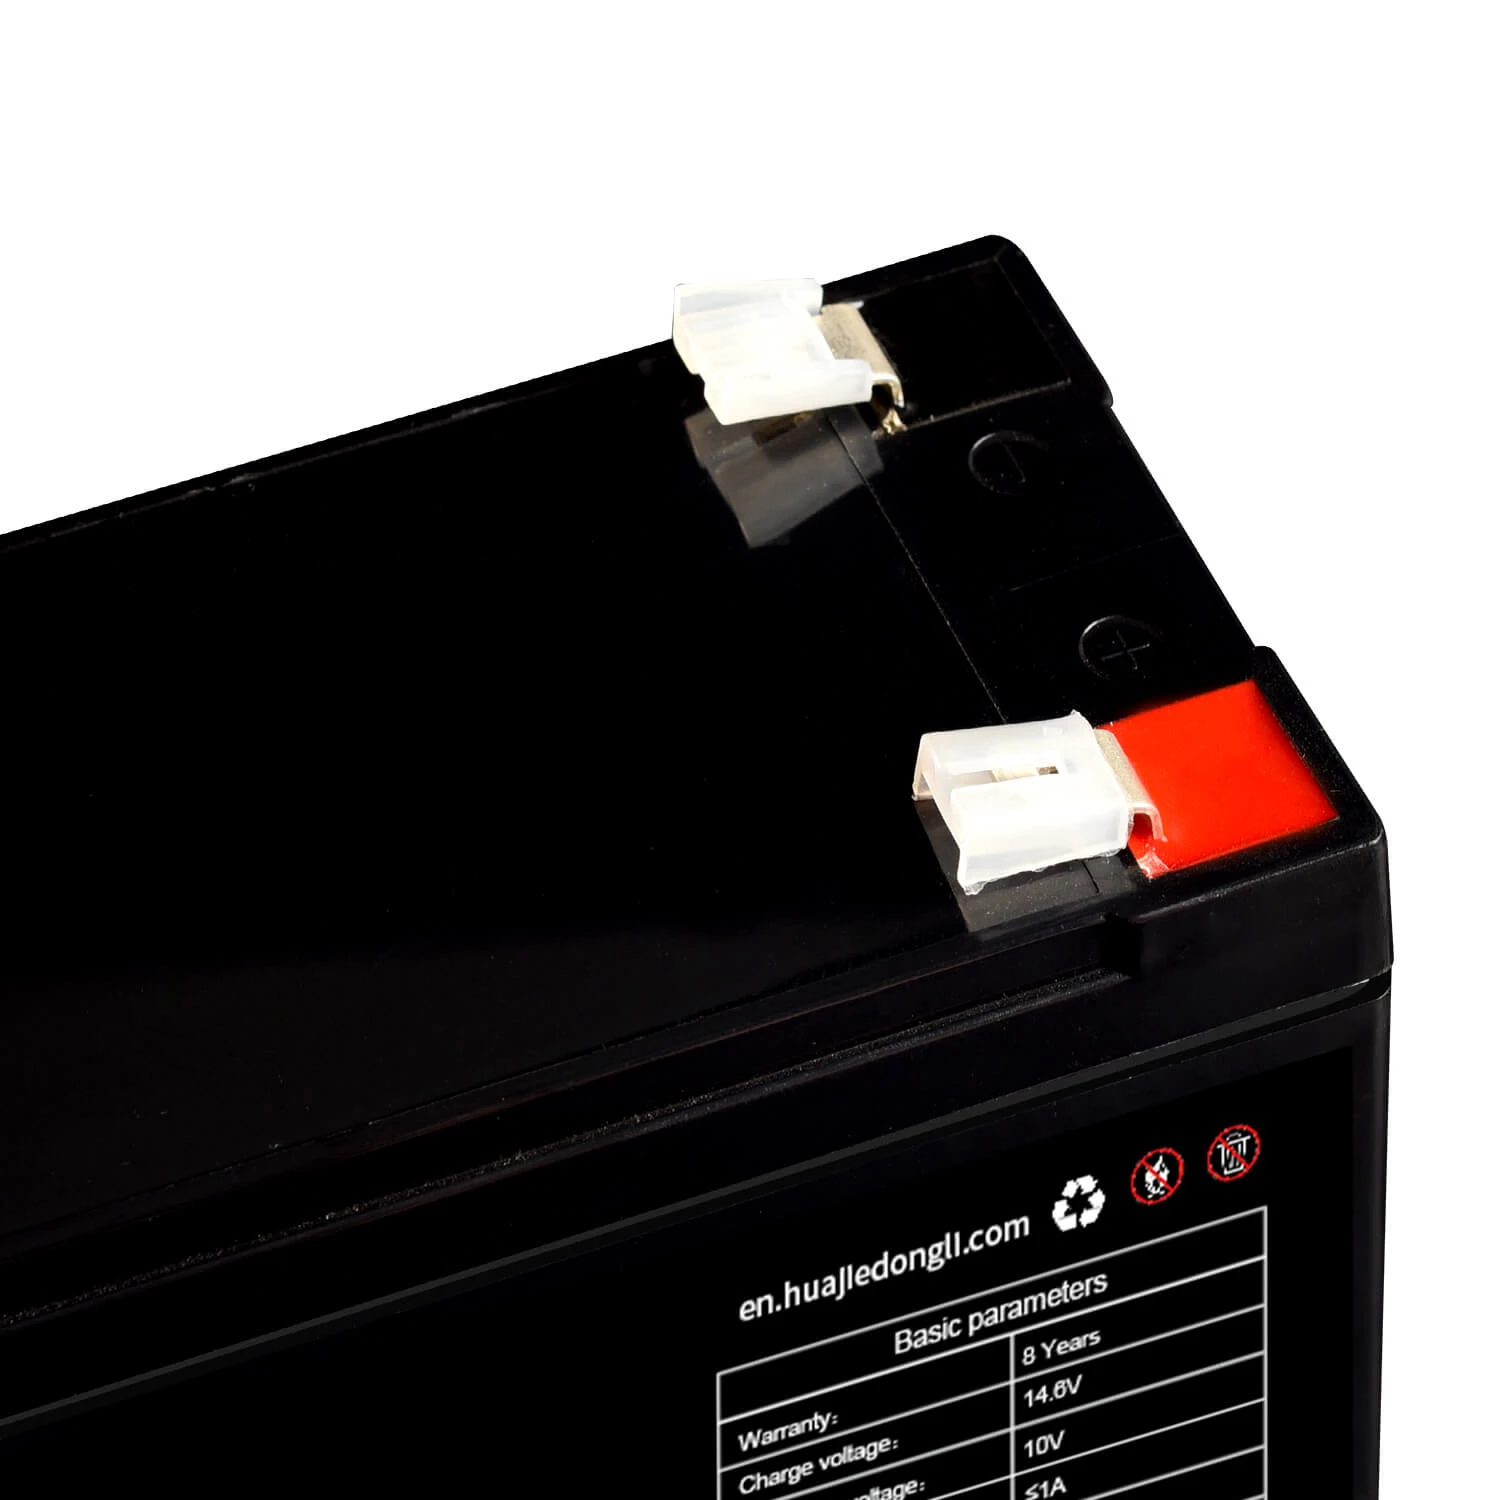 12.8V 6Ah Power Lithium Batterij Waterdicht Lifepo4 Solar Lithium Battery Pack